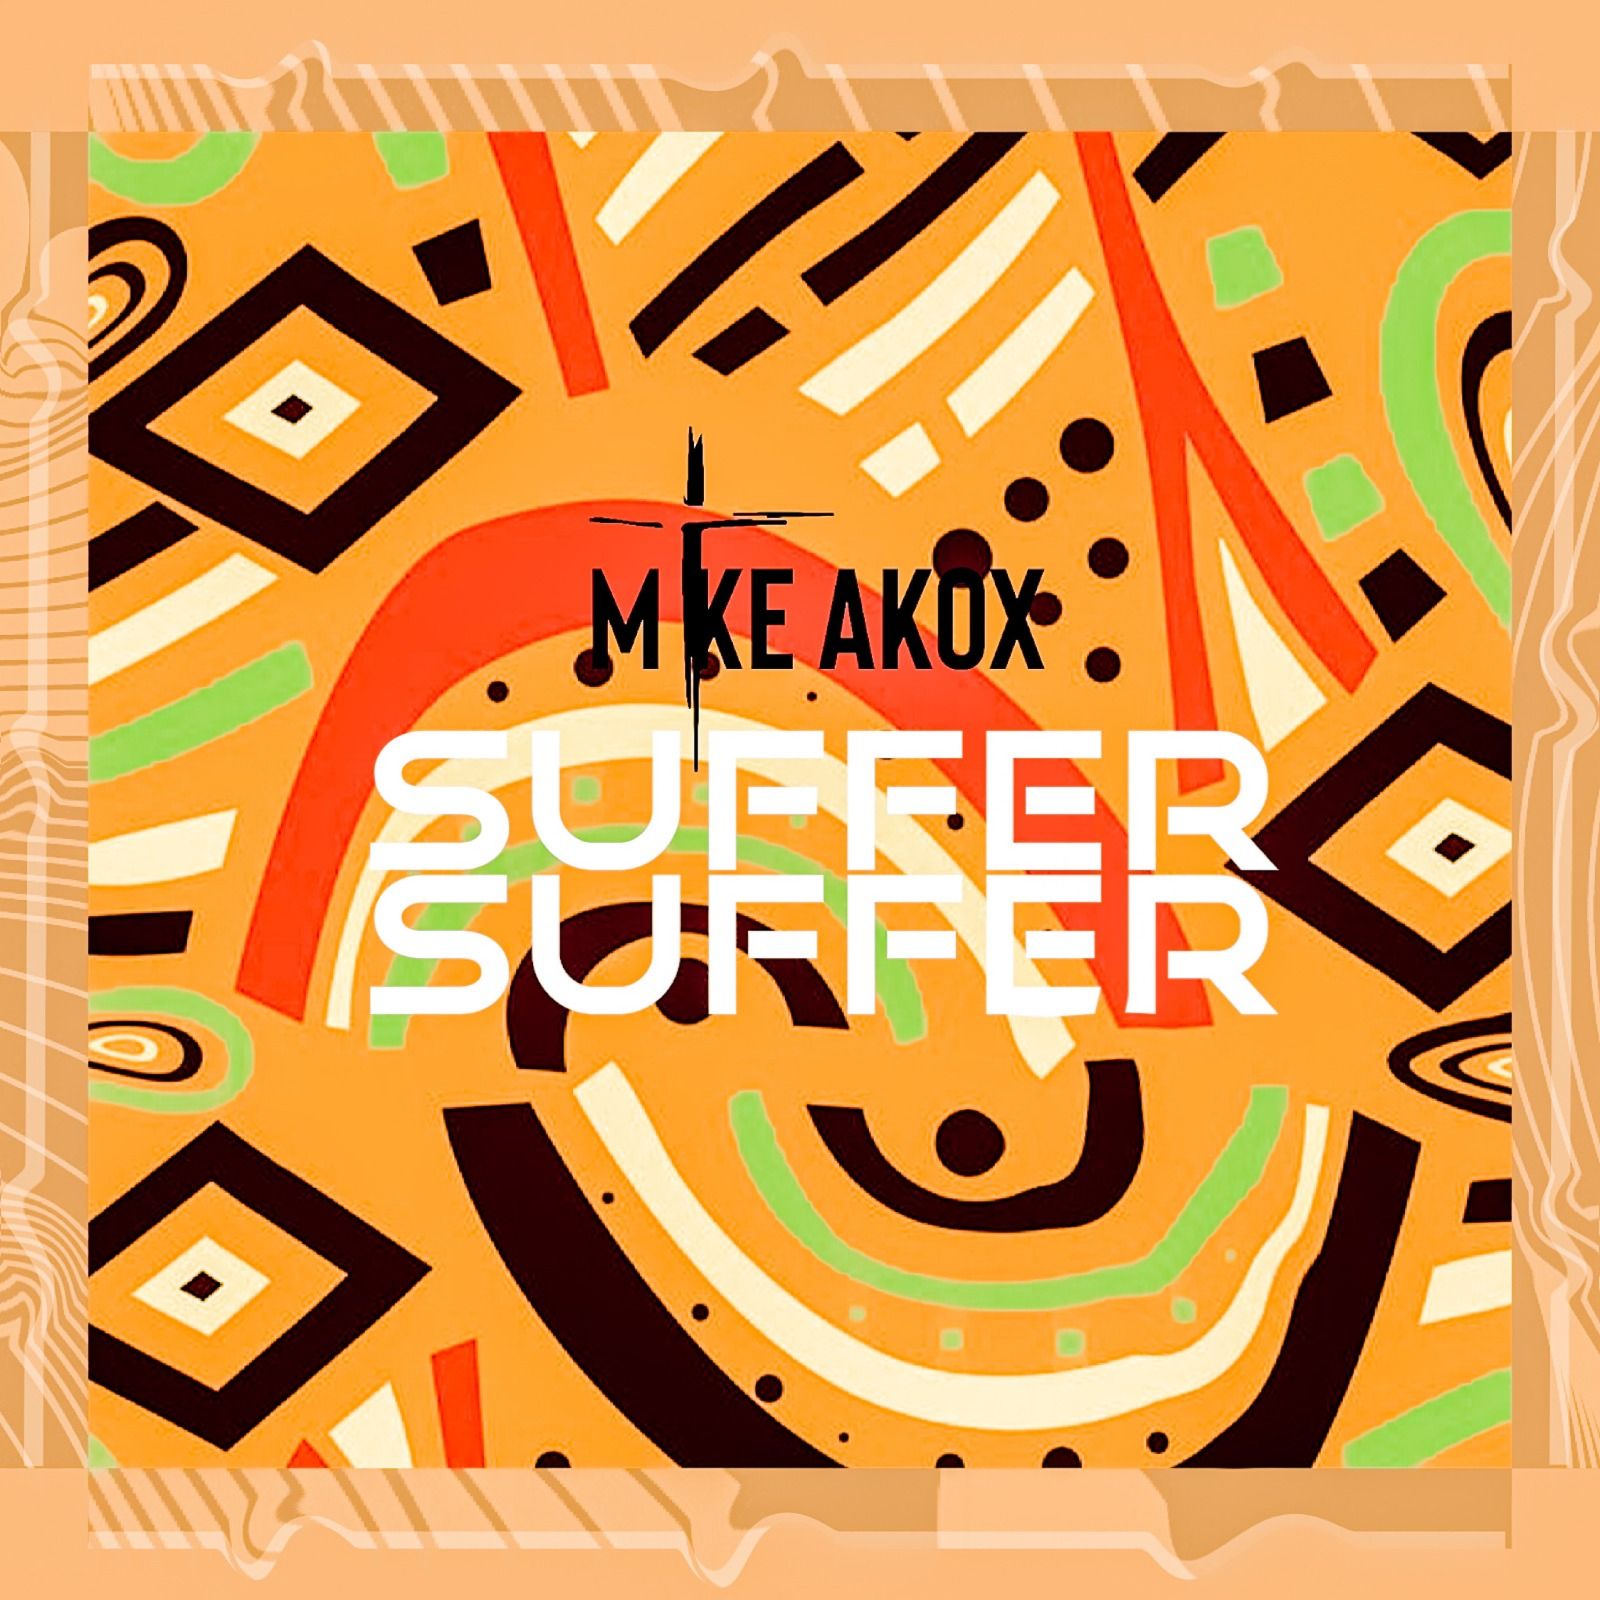 Mike Akox - Suffer Suffer